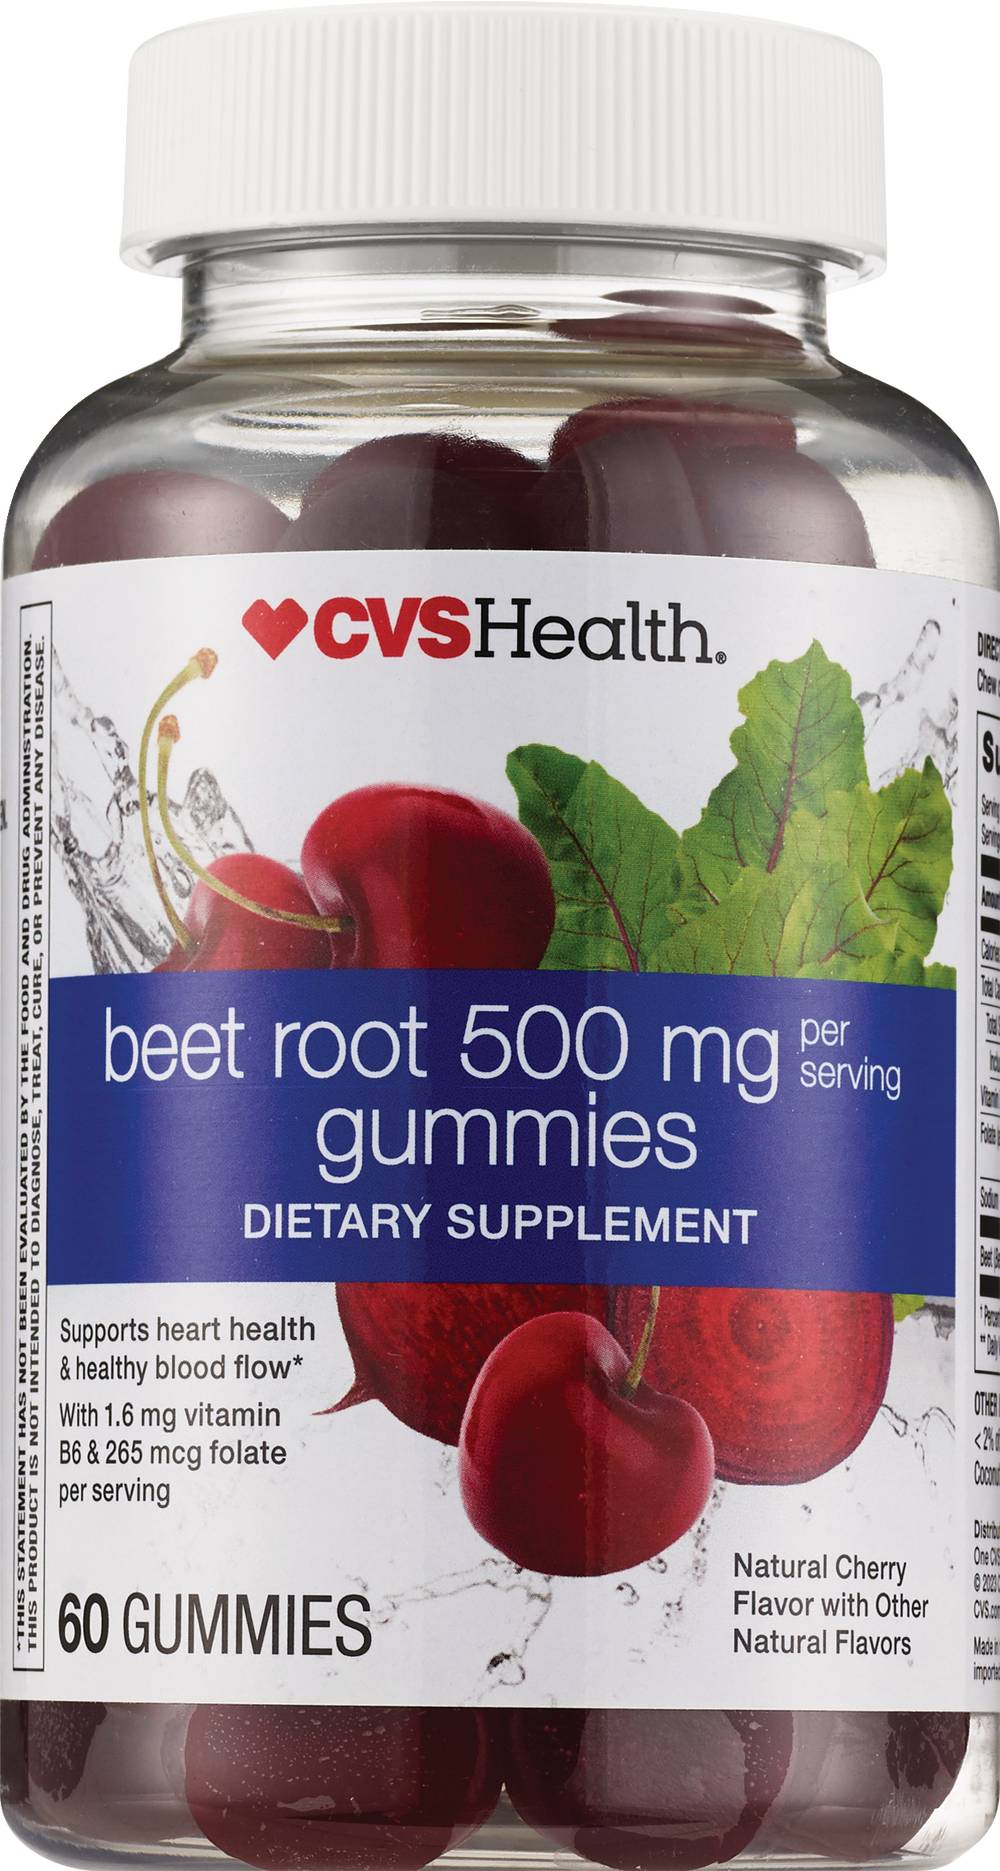 Cvs Health Gummies 500 mg (beet root)